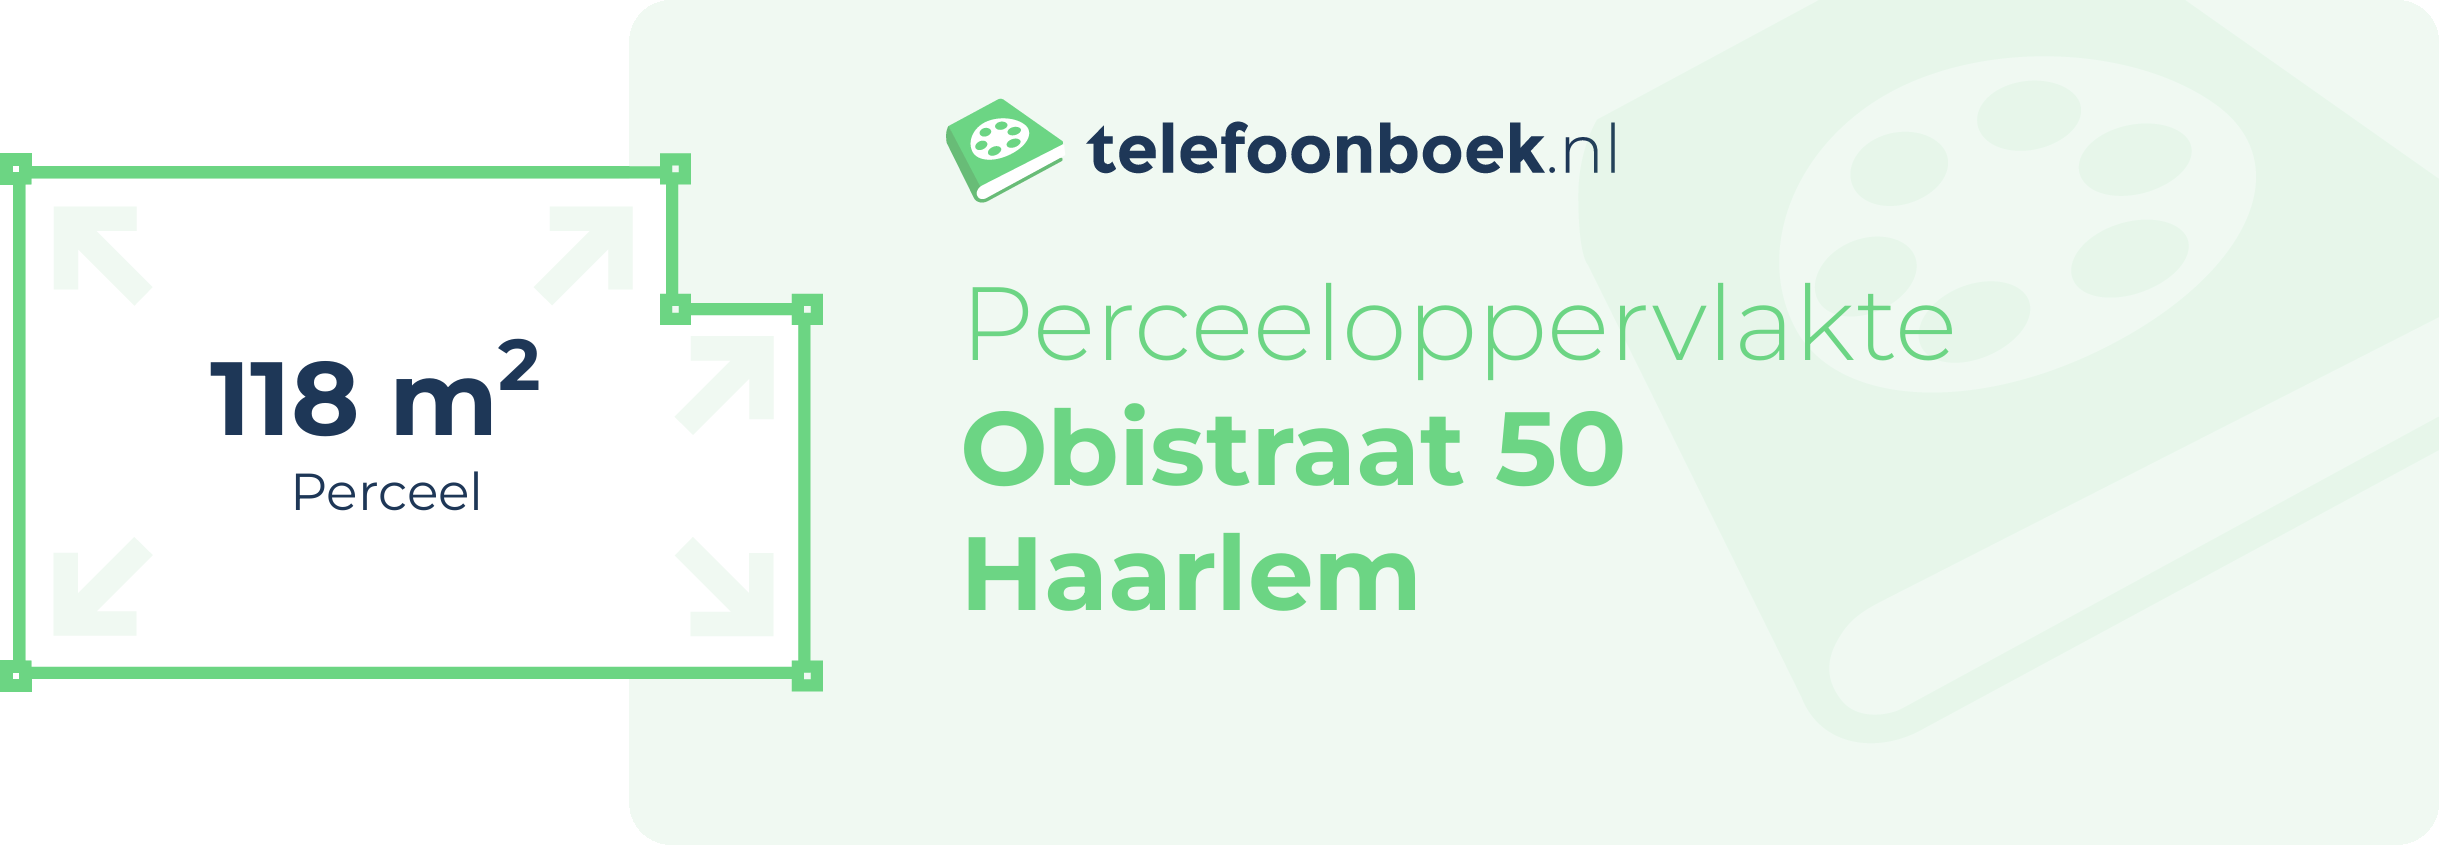 Perceeloppervlakte Obistraat 50 Haarlem